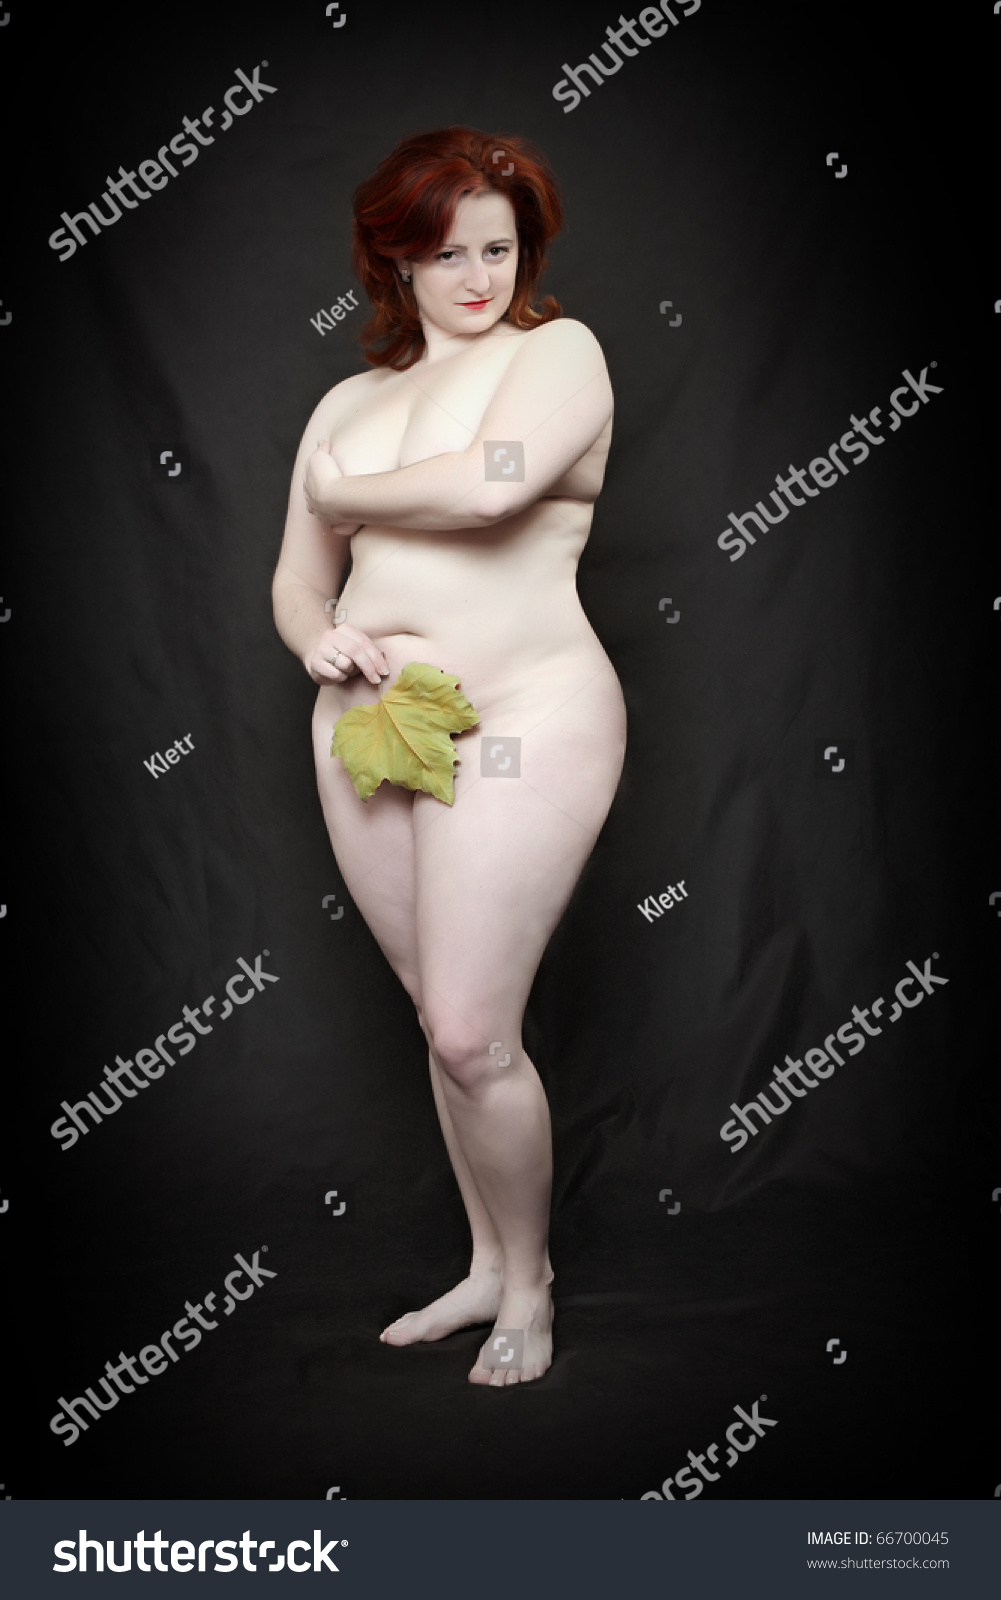 Weird Female Artistic Nude